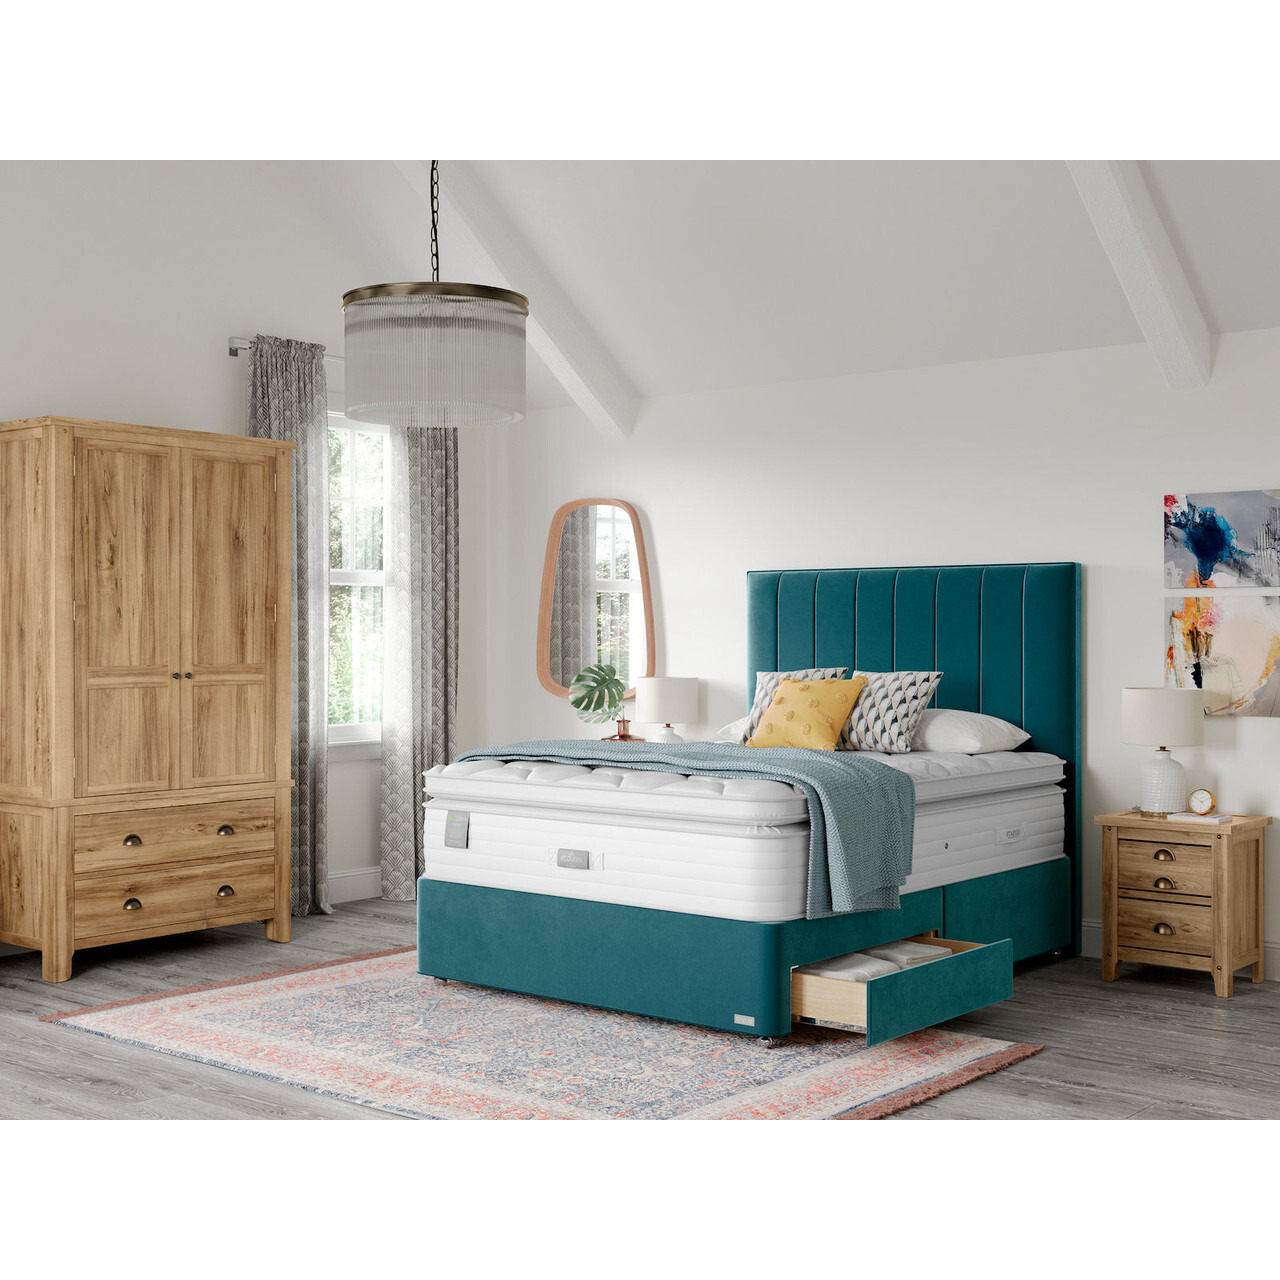 Staples & Co Revitalise Eco Latex Pocket 3800 Divan Bed Set - image 1